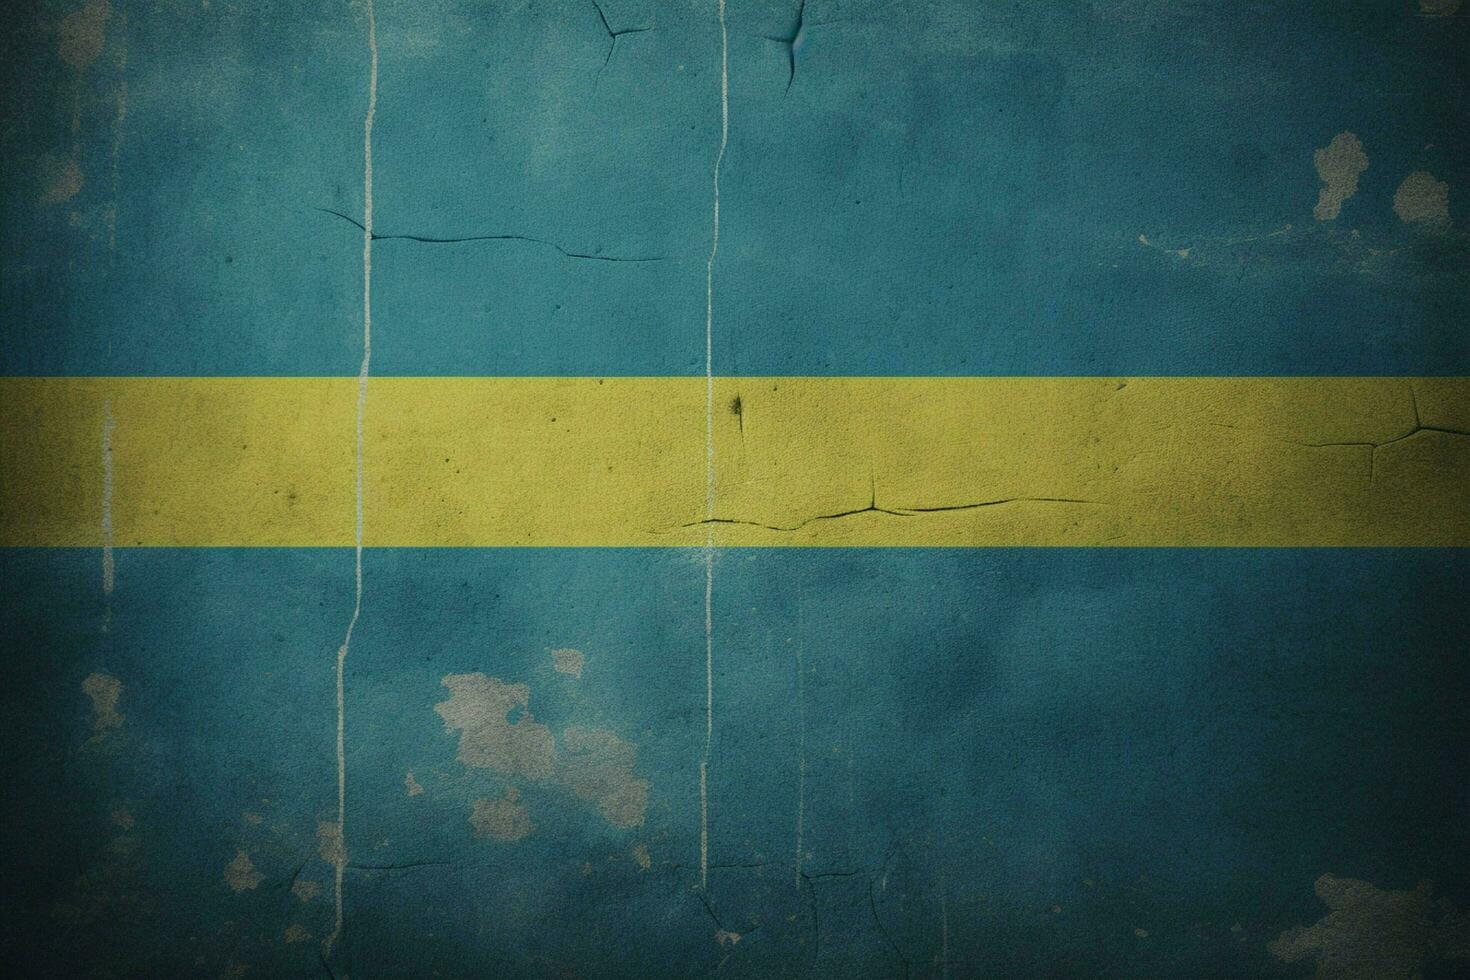 flag wallpaper of Sweden photo